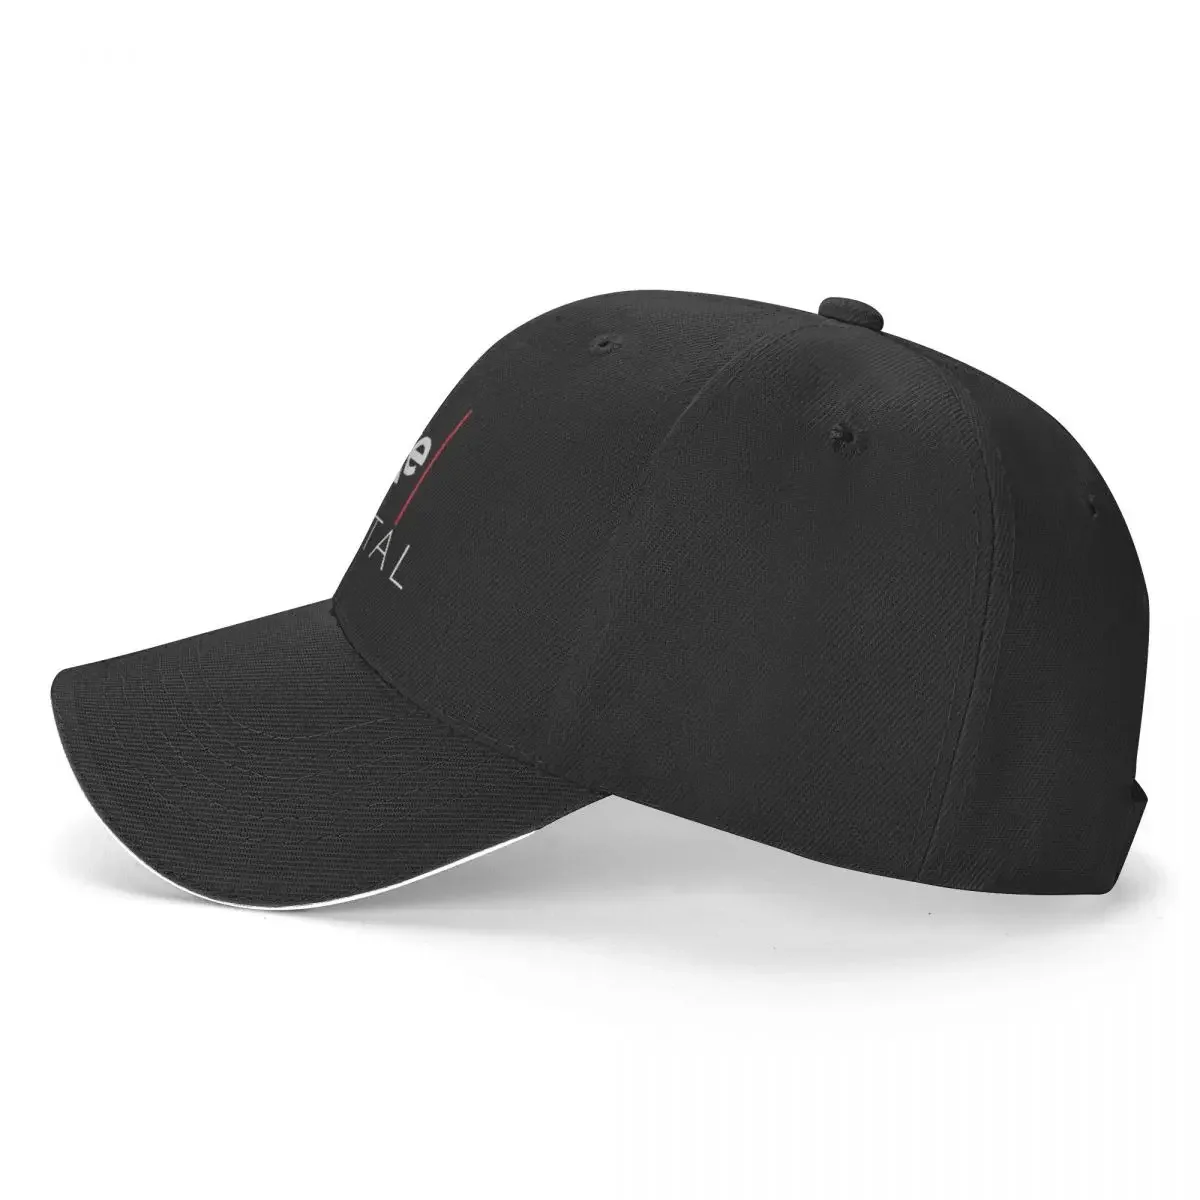 Axe Capital LogoCap Baseball Cap military tactical caps Cap hat Brand man caps hat for women Men's